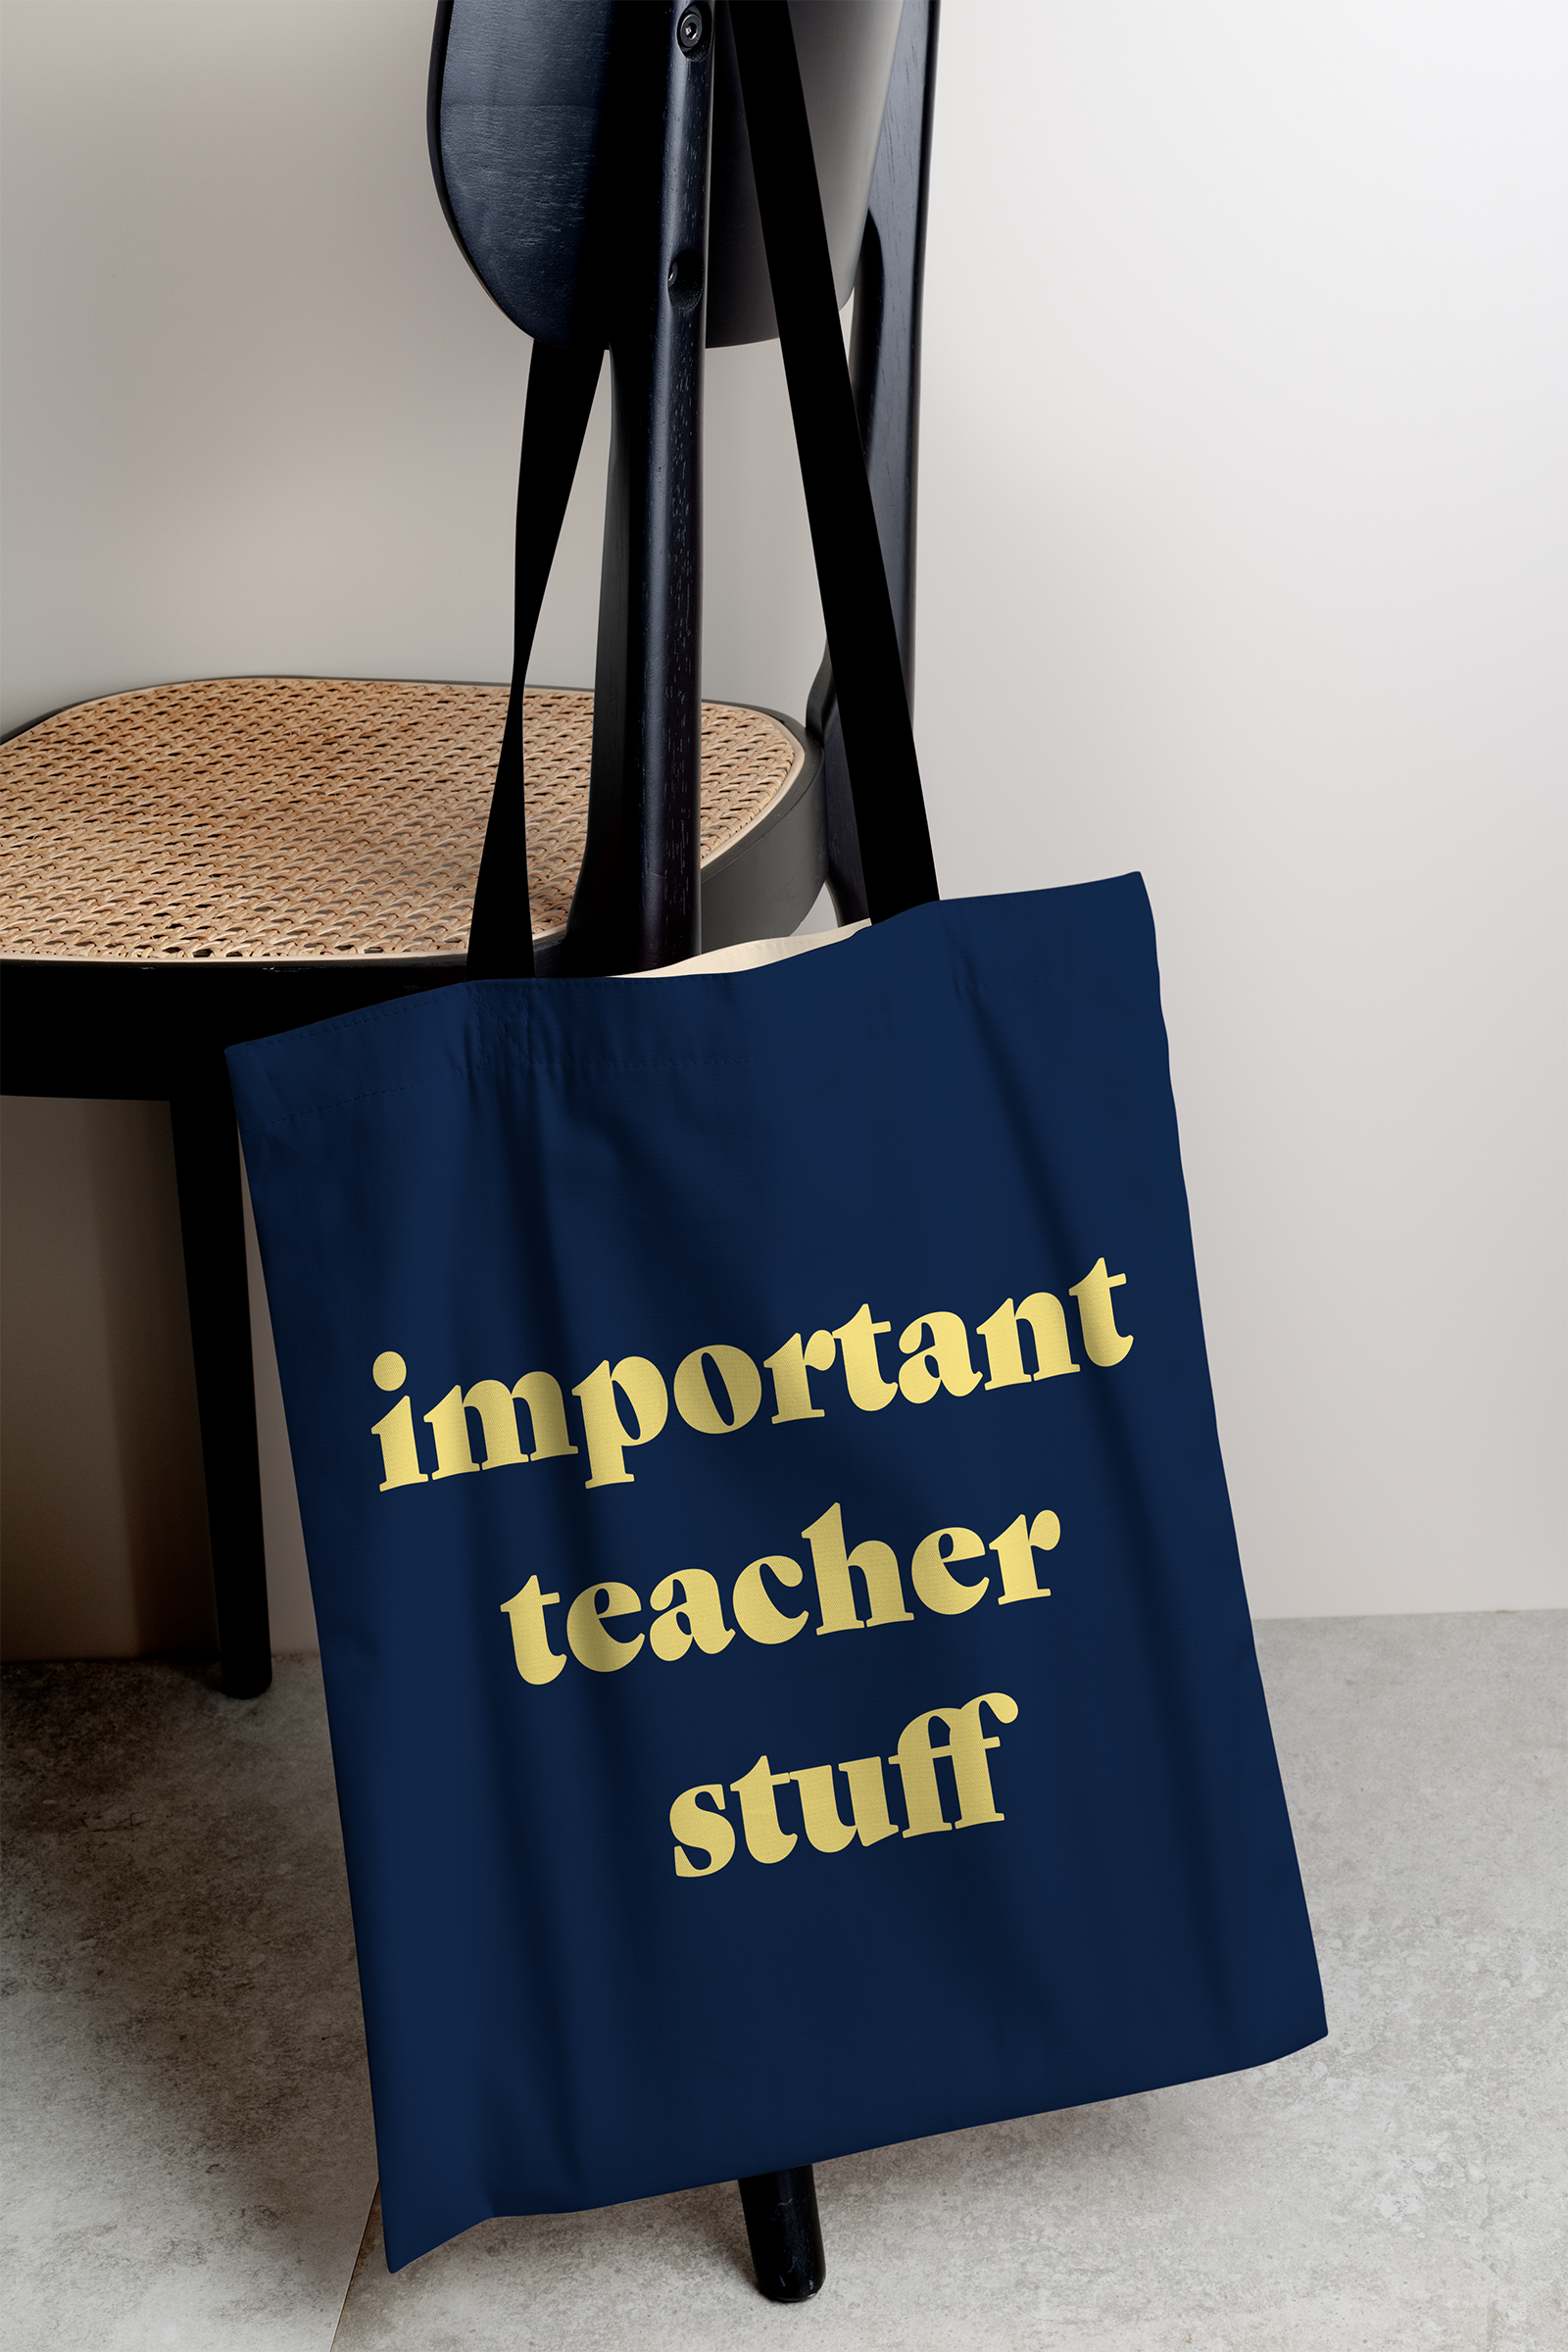 Teacher Stuff Tote Bag